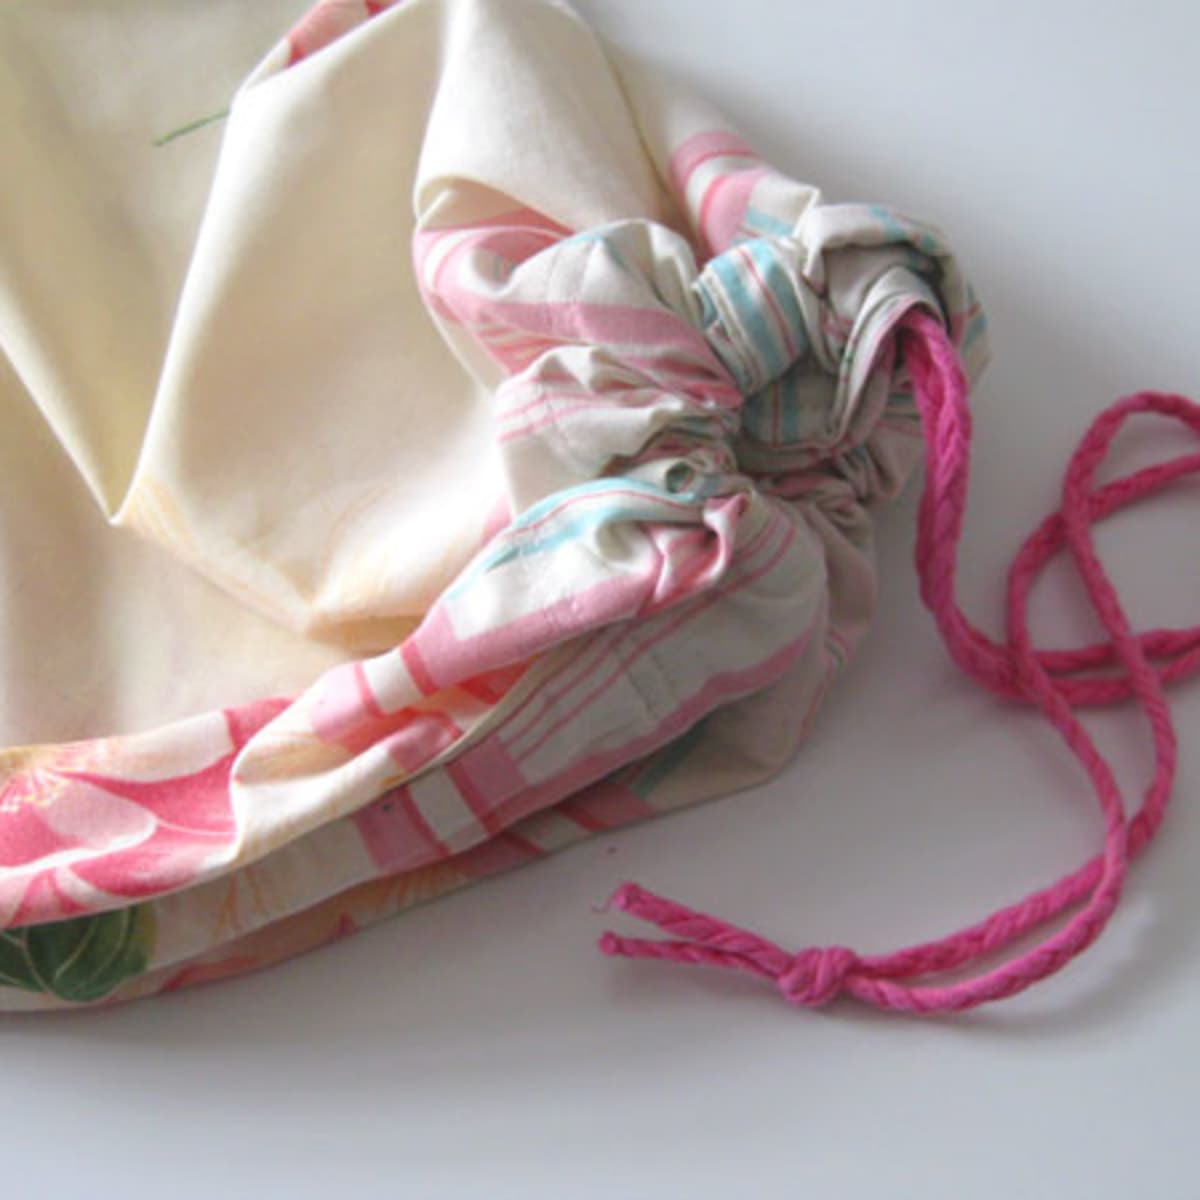 Homemade Mesh Laundry Bag Sewing Tutorial : DIY Lingerie Wash Bag 